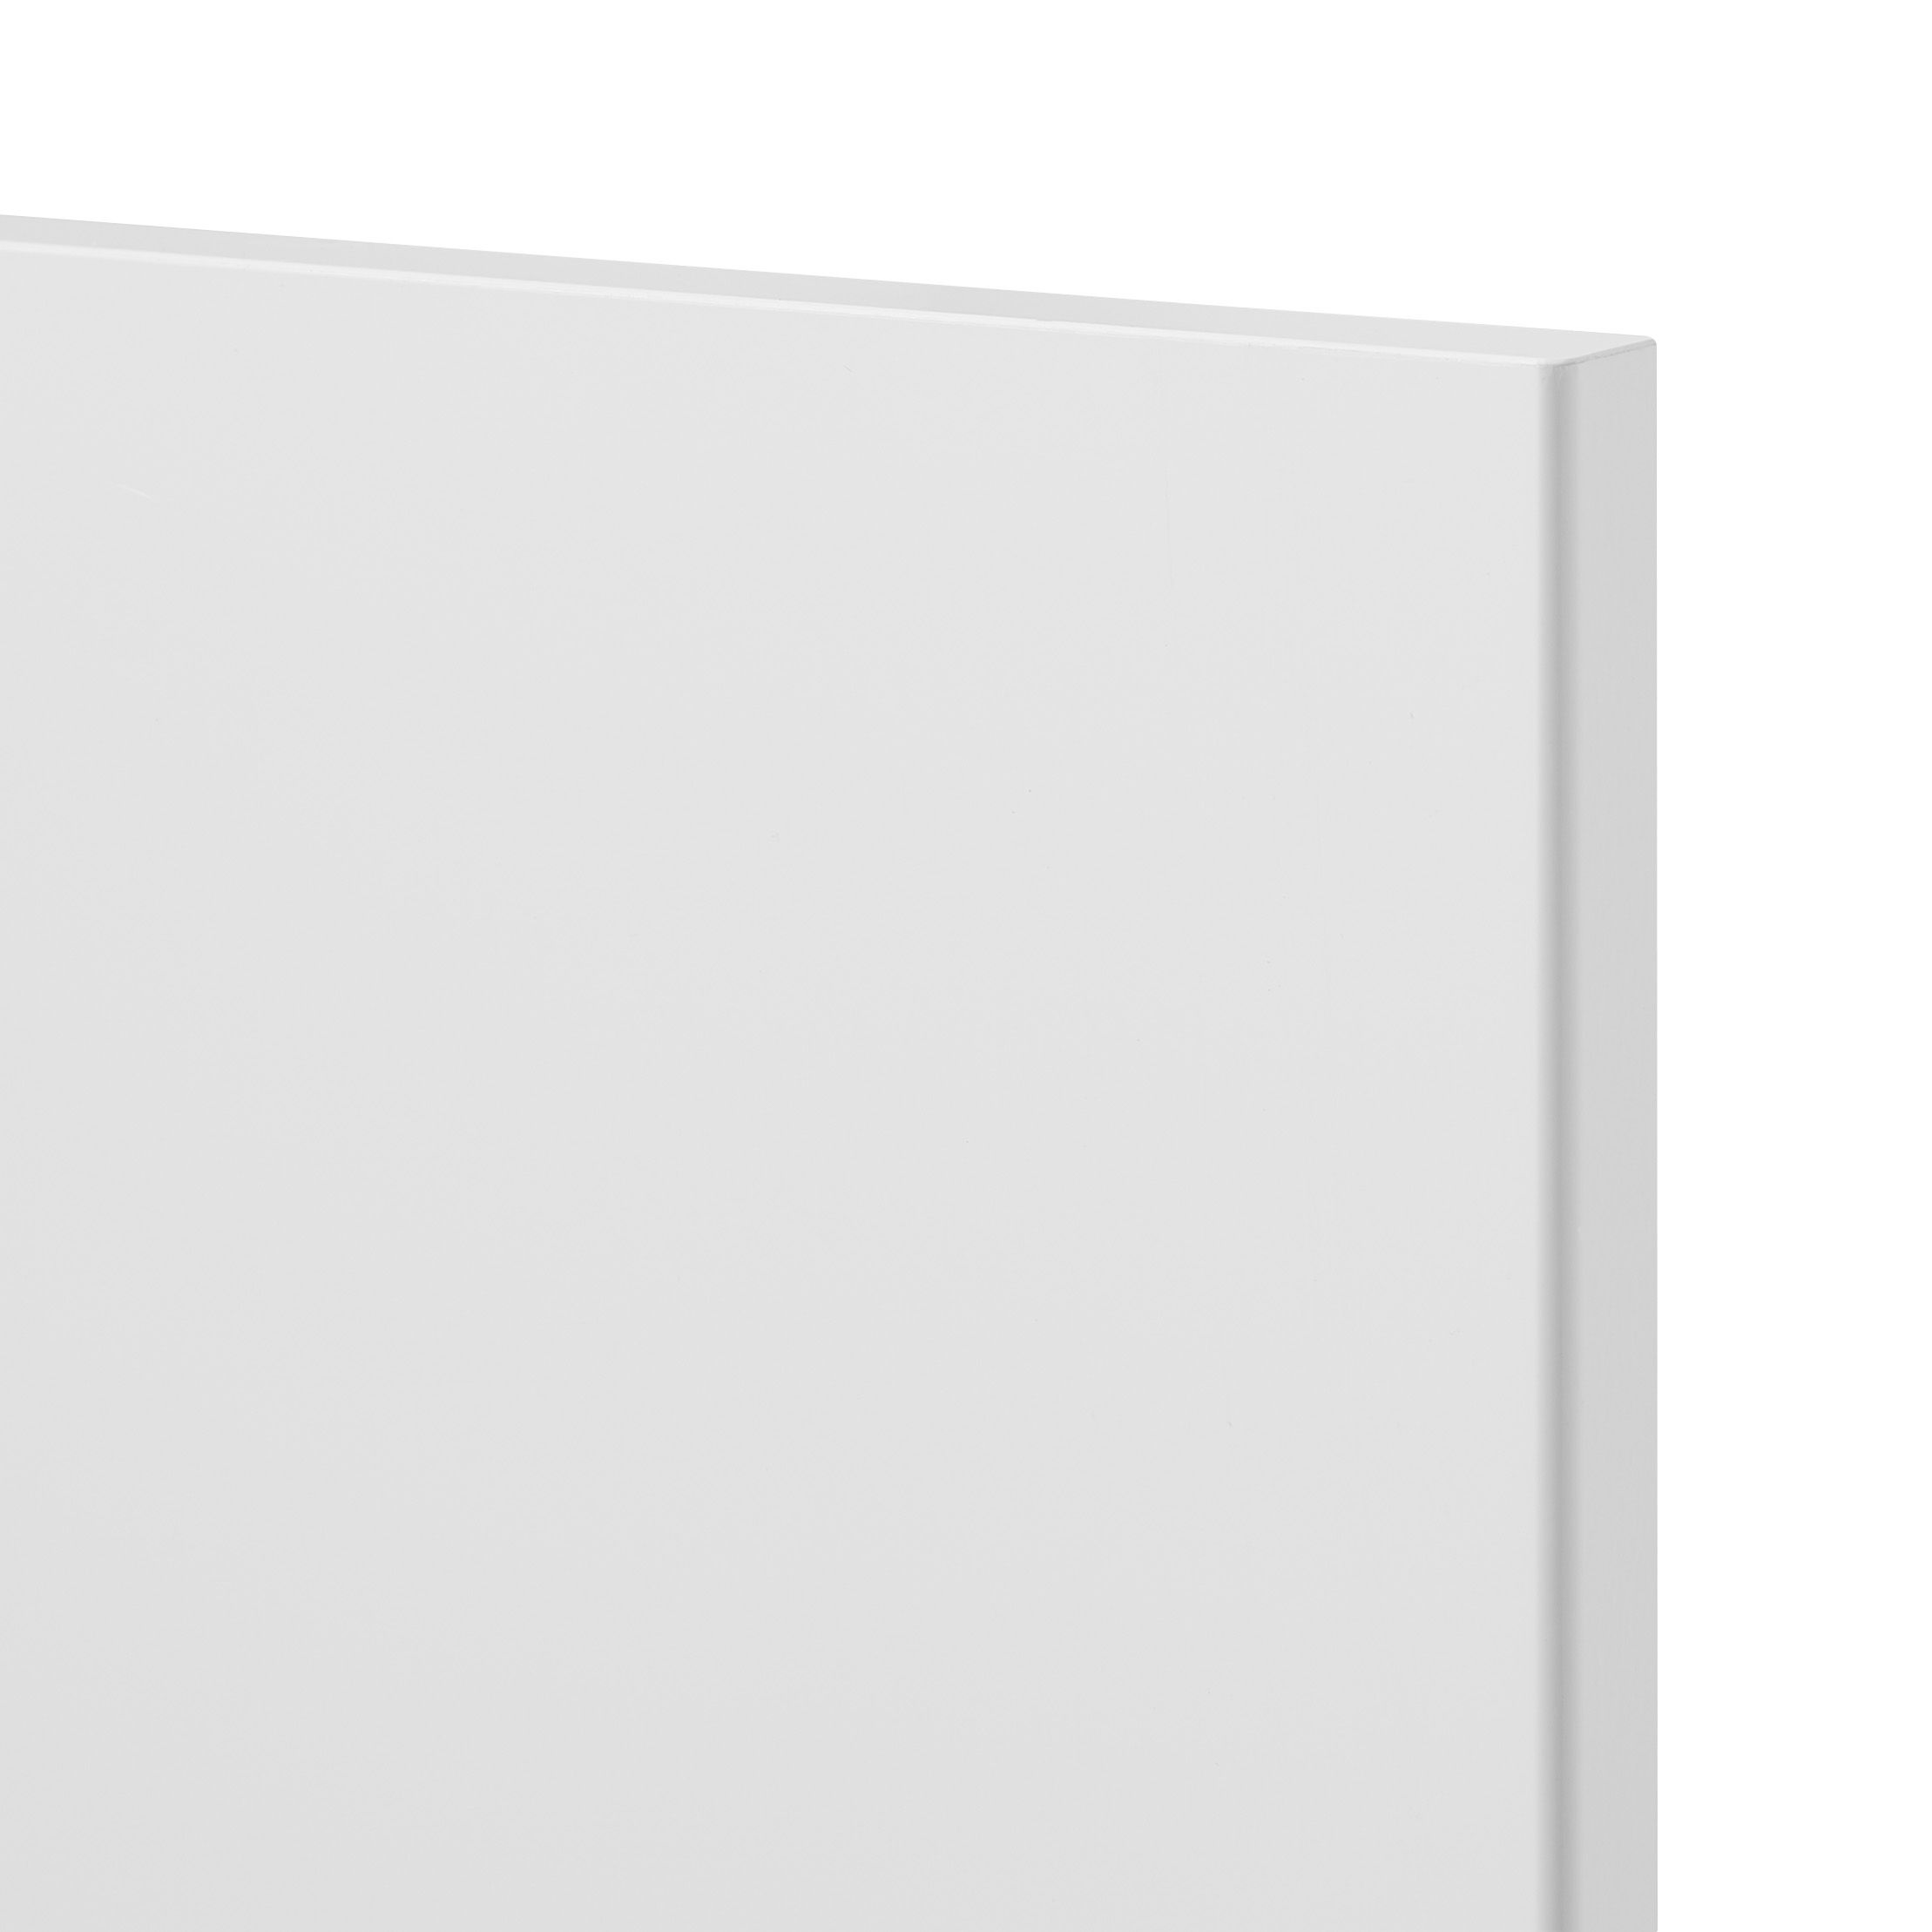 GoodHome Stevia Gloss white slab Drawerline Cabinet door, (W)400mm (H)715mm (T)18mm